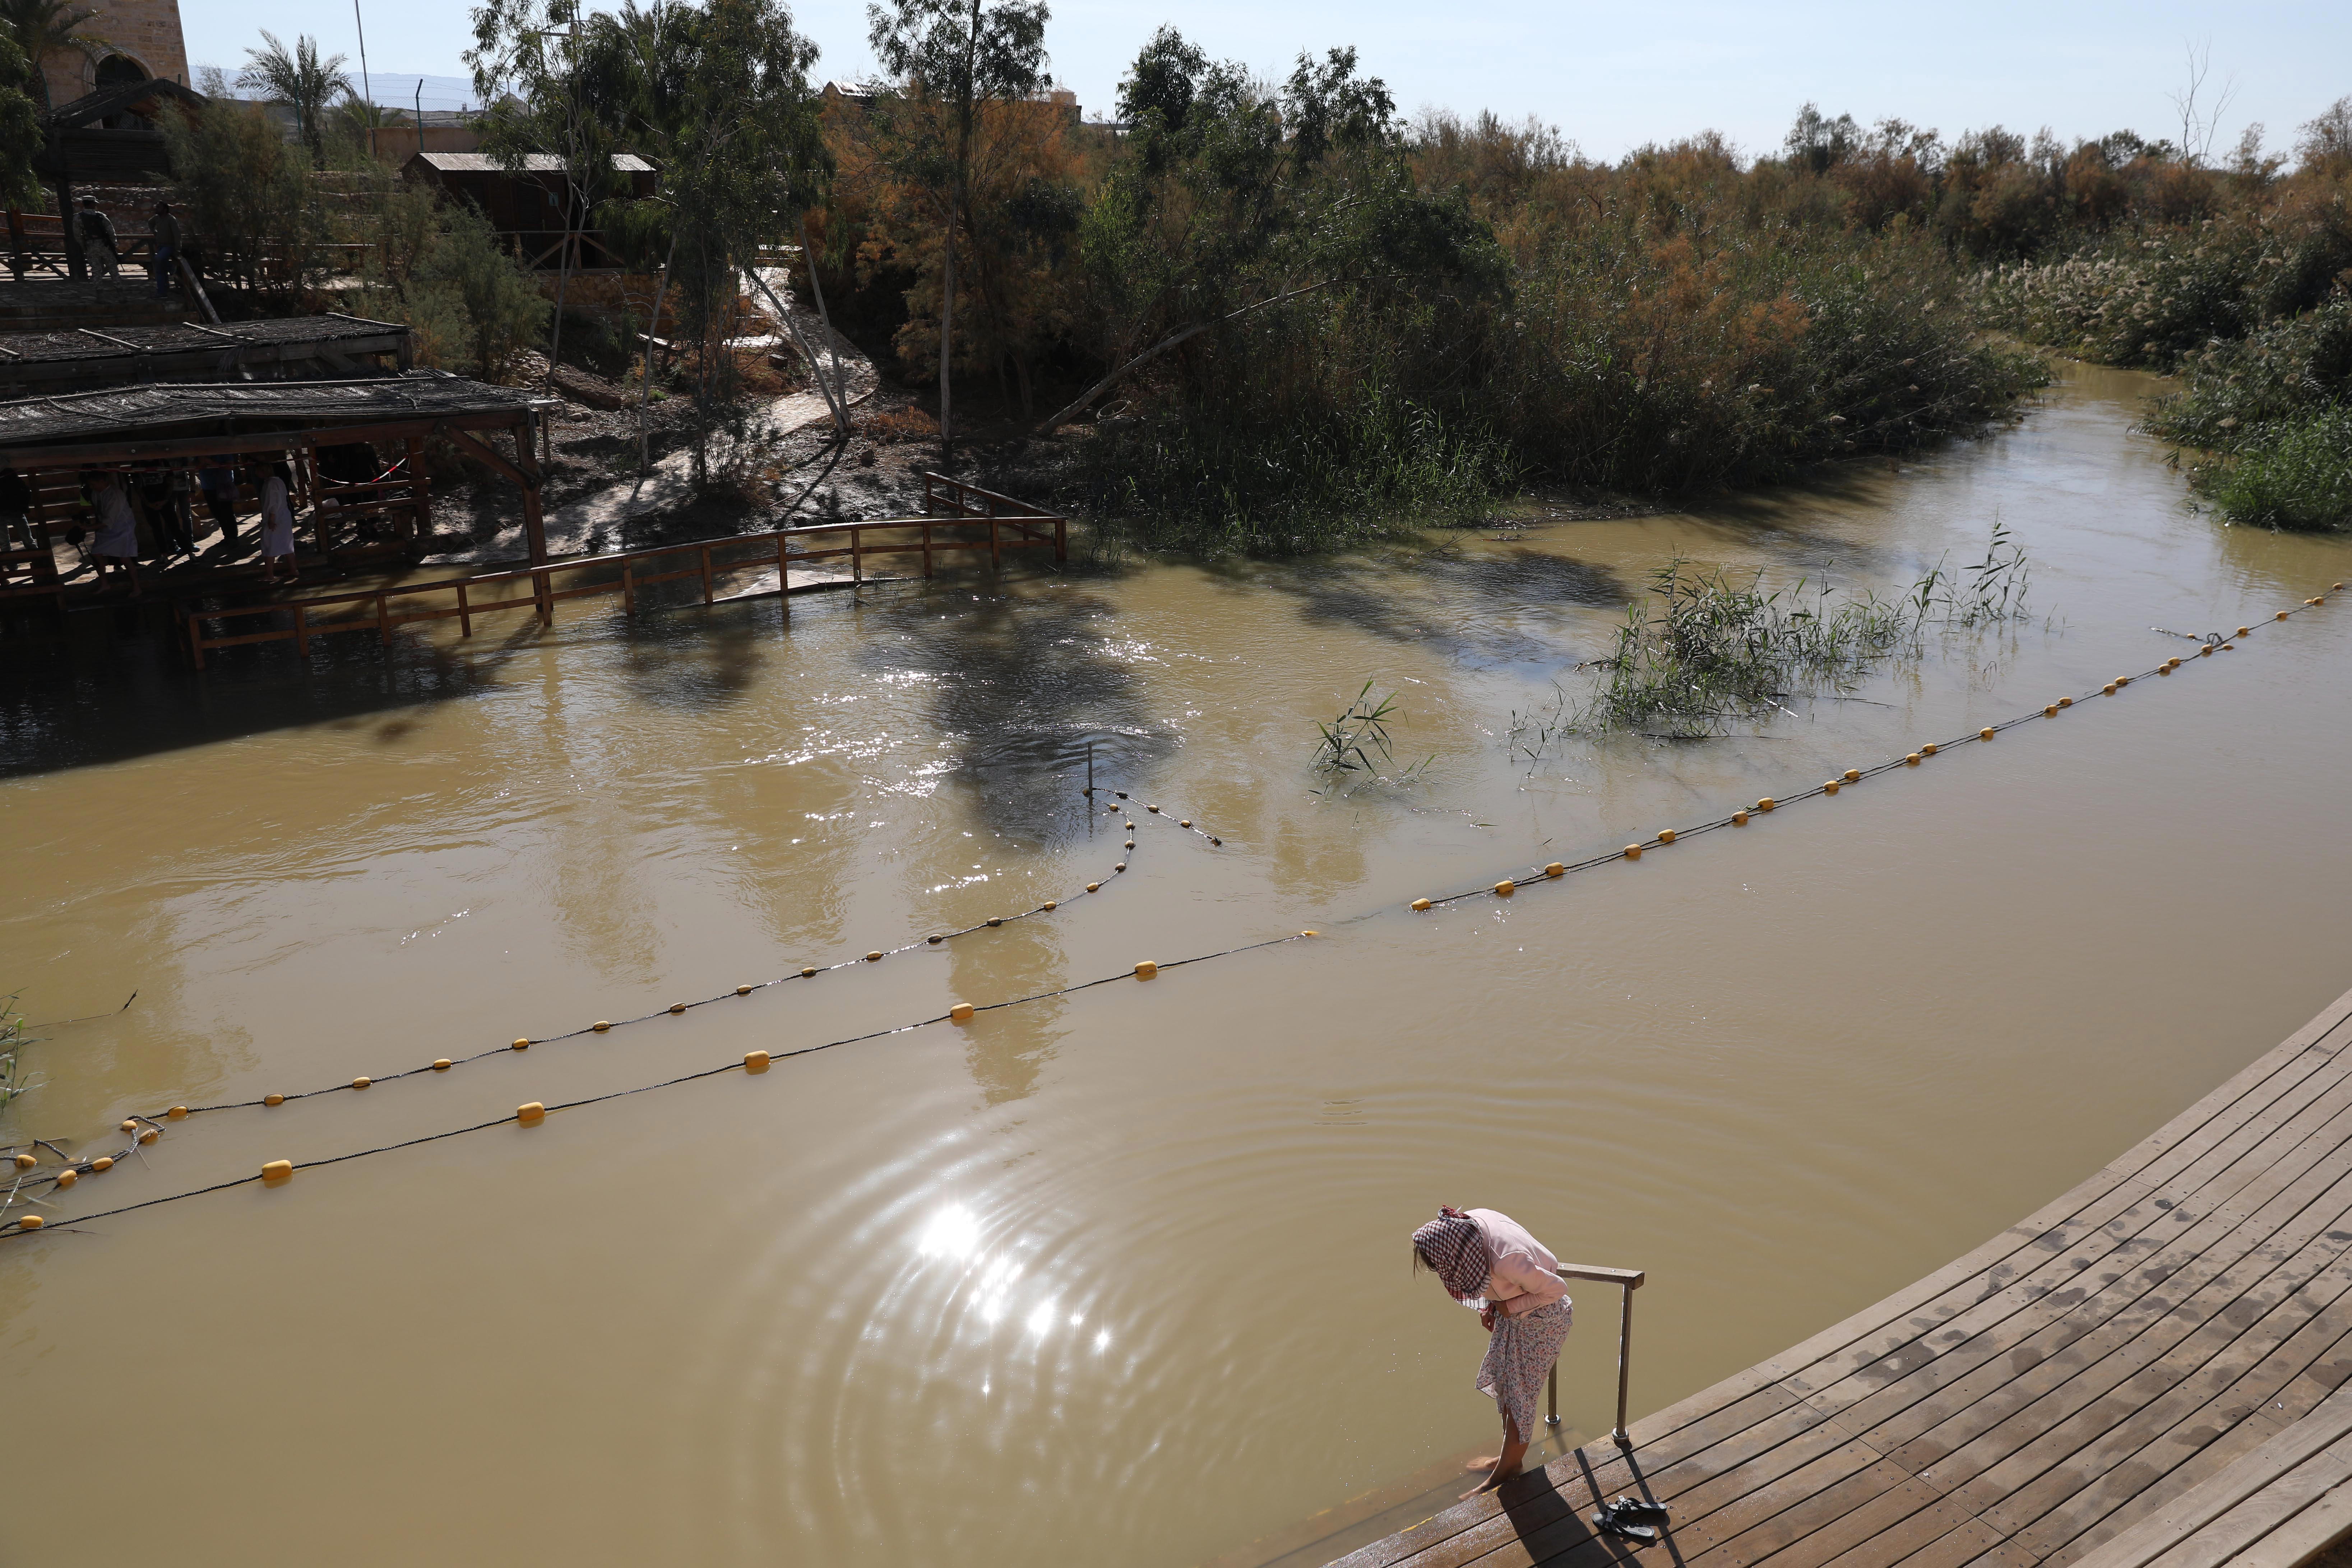 Tierra Santa Qasr al-Yahud baptism site in the Jordan River